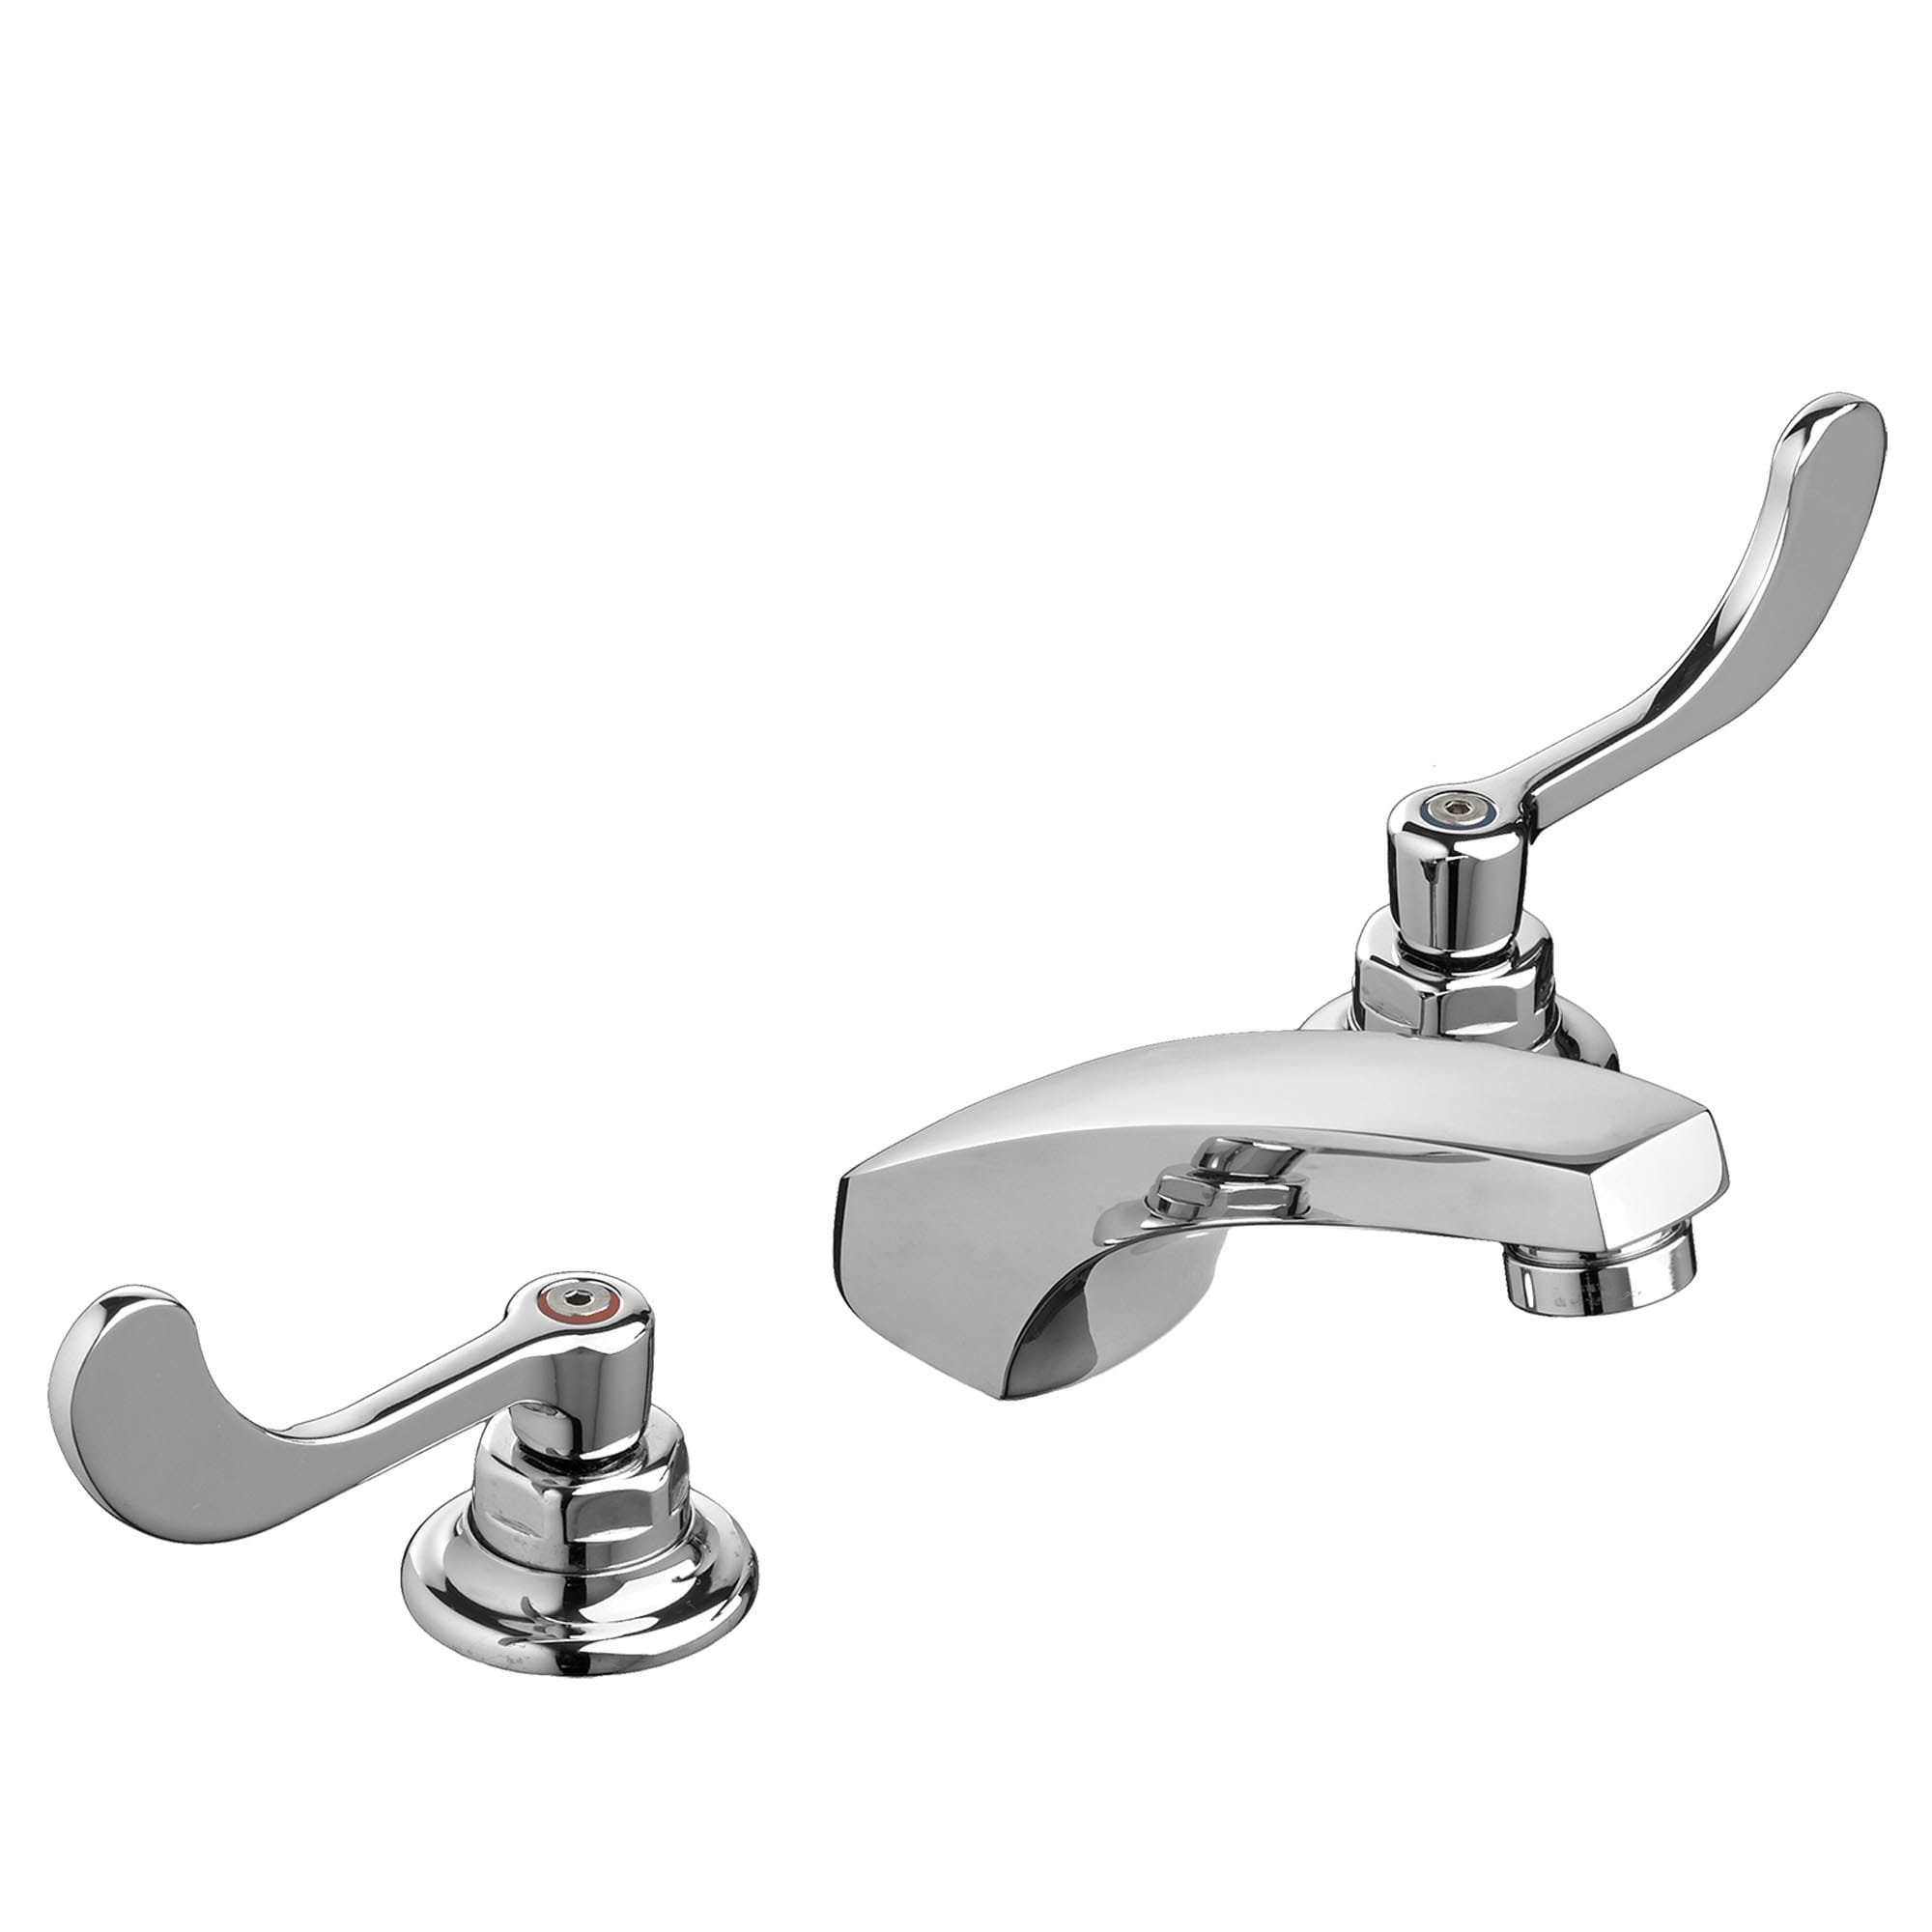 Monterrey® 8-Inch Widespread Cast Faucet With Wrist Blade Handles 0.35 gpm/1.3 Lpm